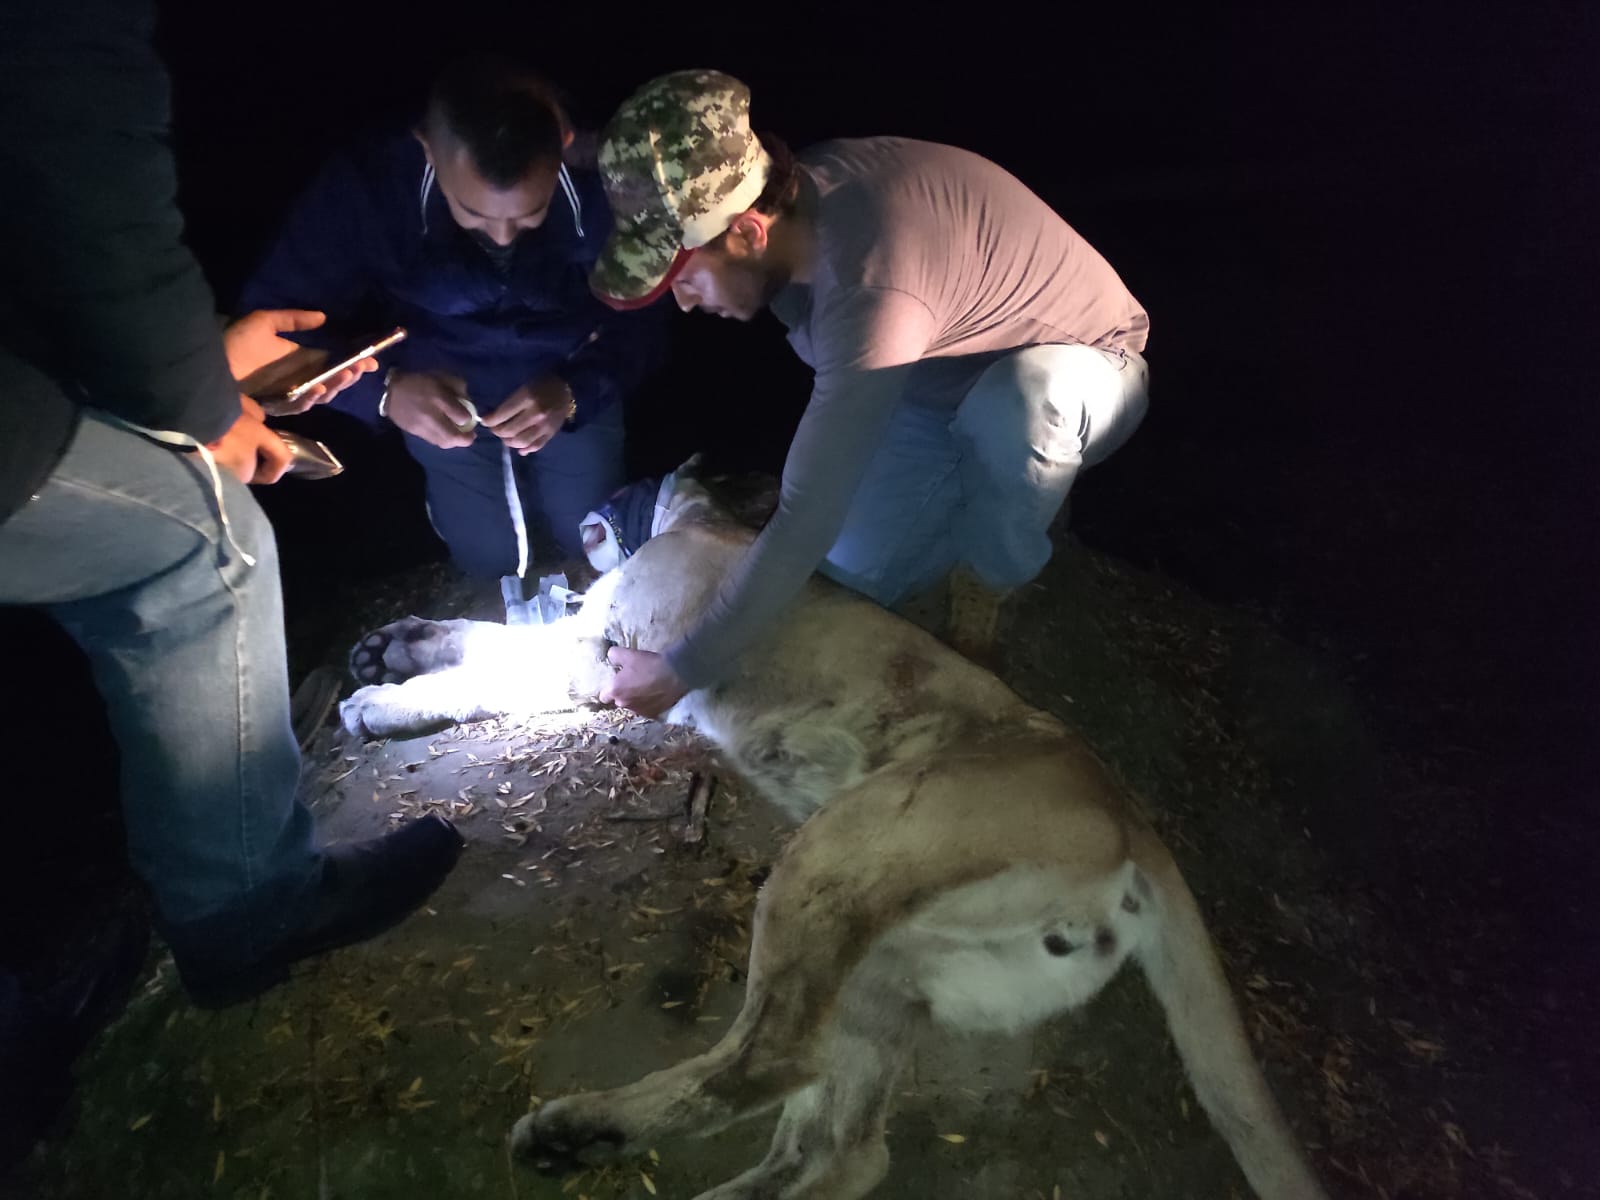 Encabeza personal del Zoológico del Altiplano operativo para resguardar a un puma